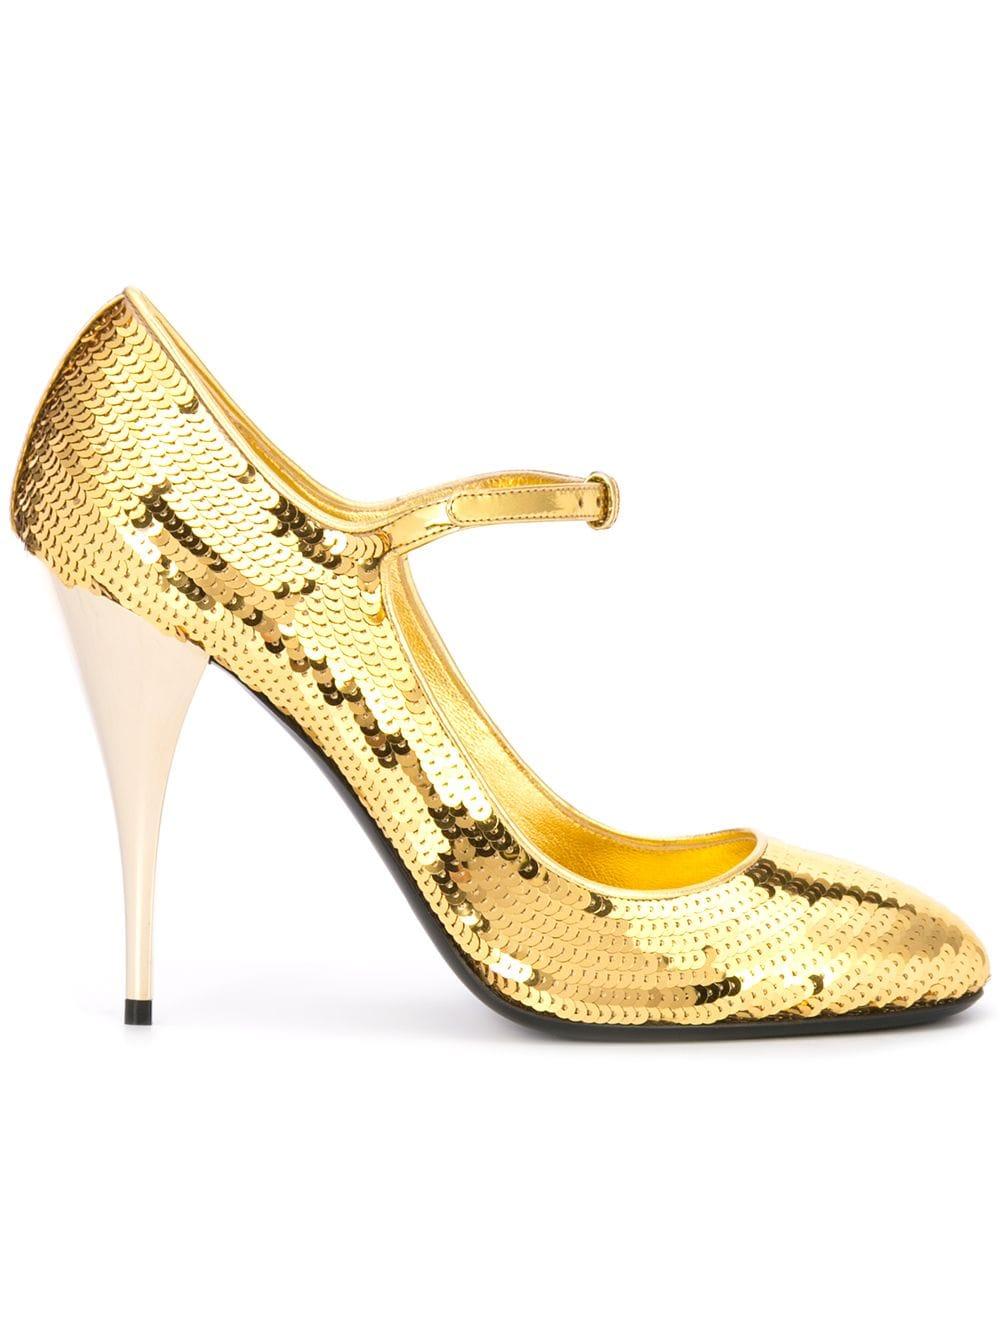 Miu Miu Leather Sequin Mary Jane Pumps in Gold (Metallic) - Lyst